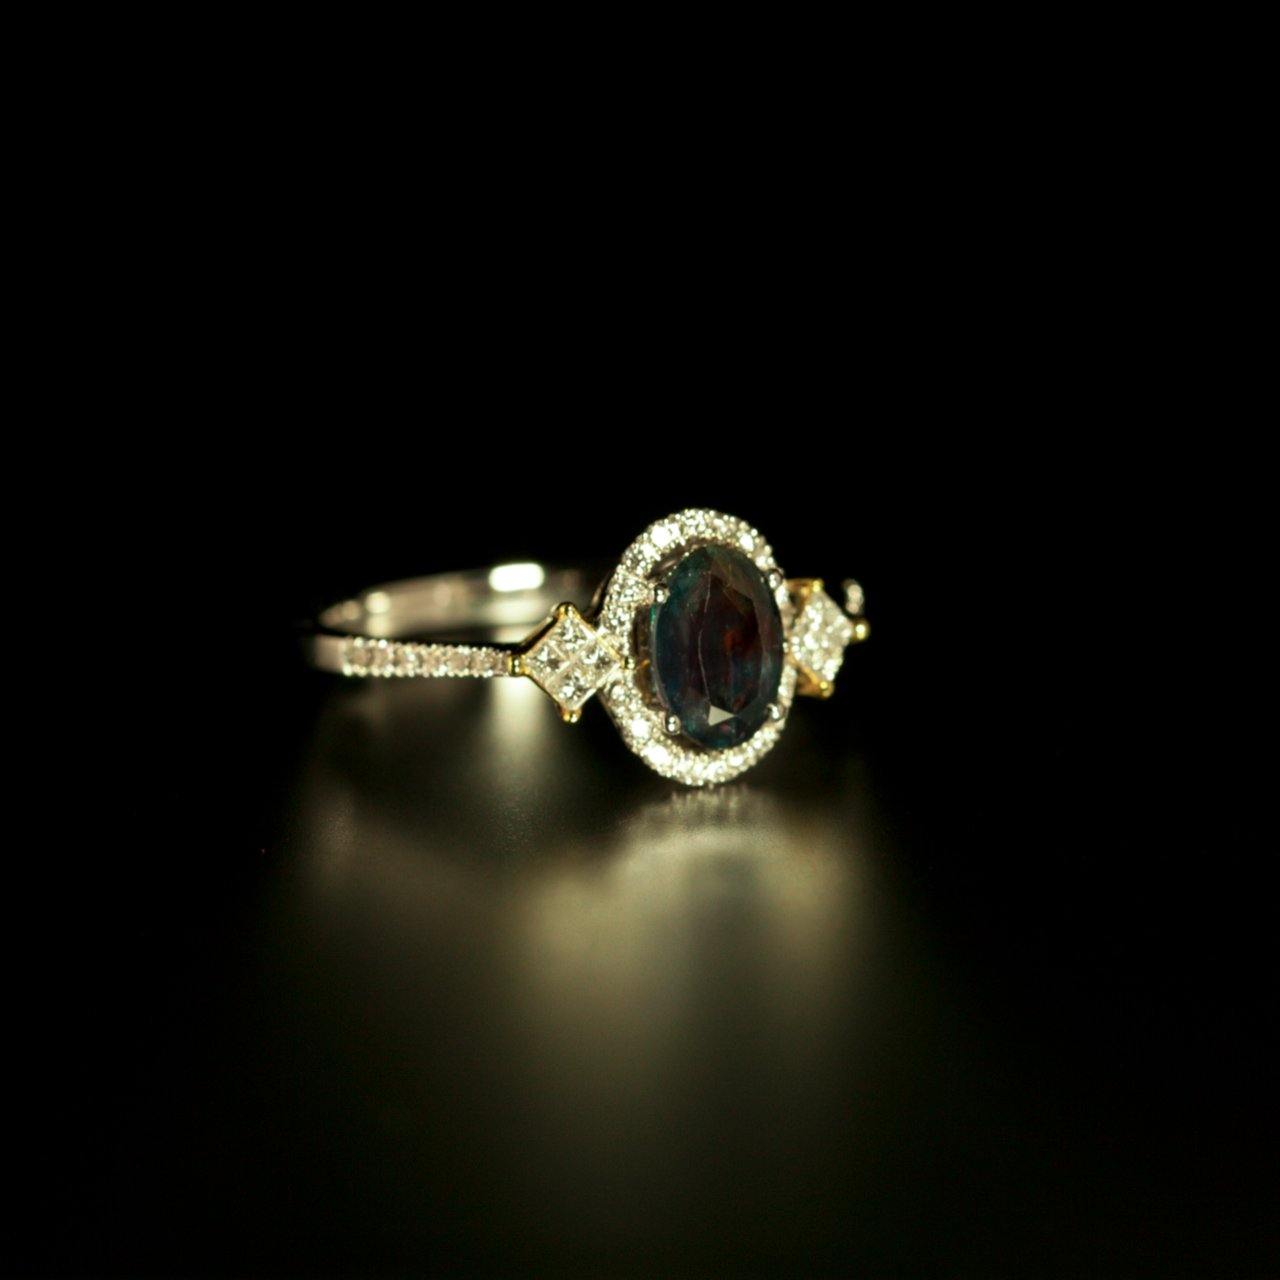 1.51ctw Super Rare 100% Color Change Natural Alexandrite Diamond 18k Gold Ring - The Alexandrite